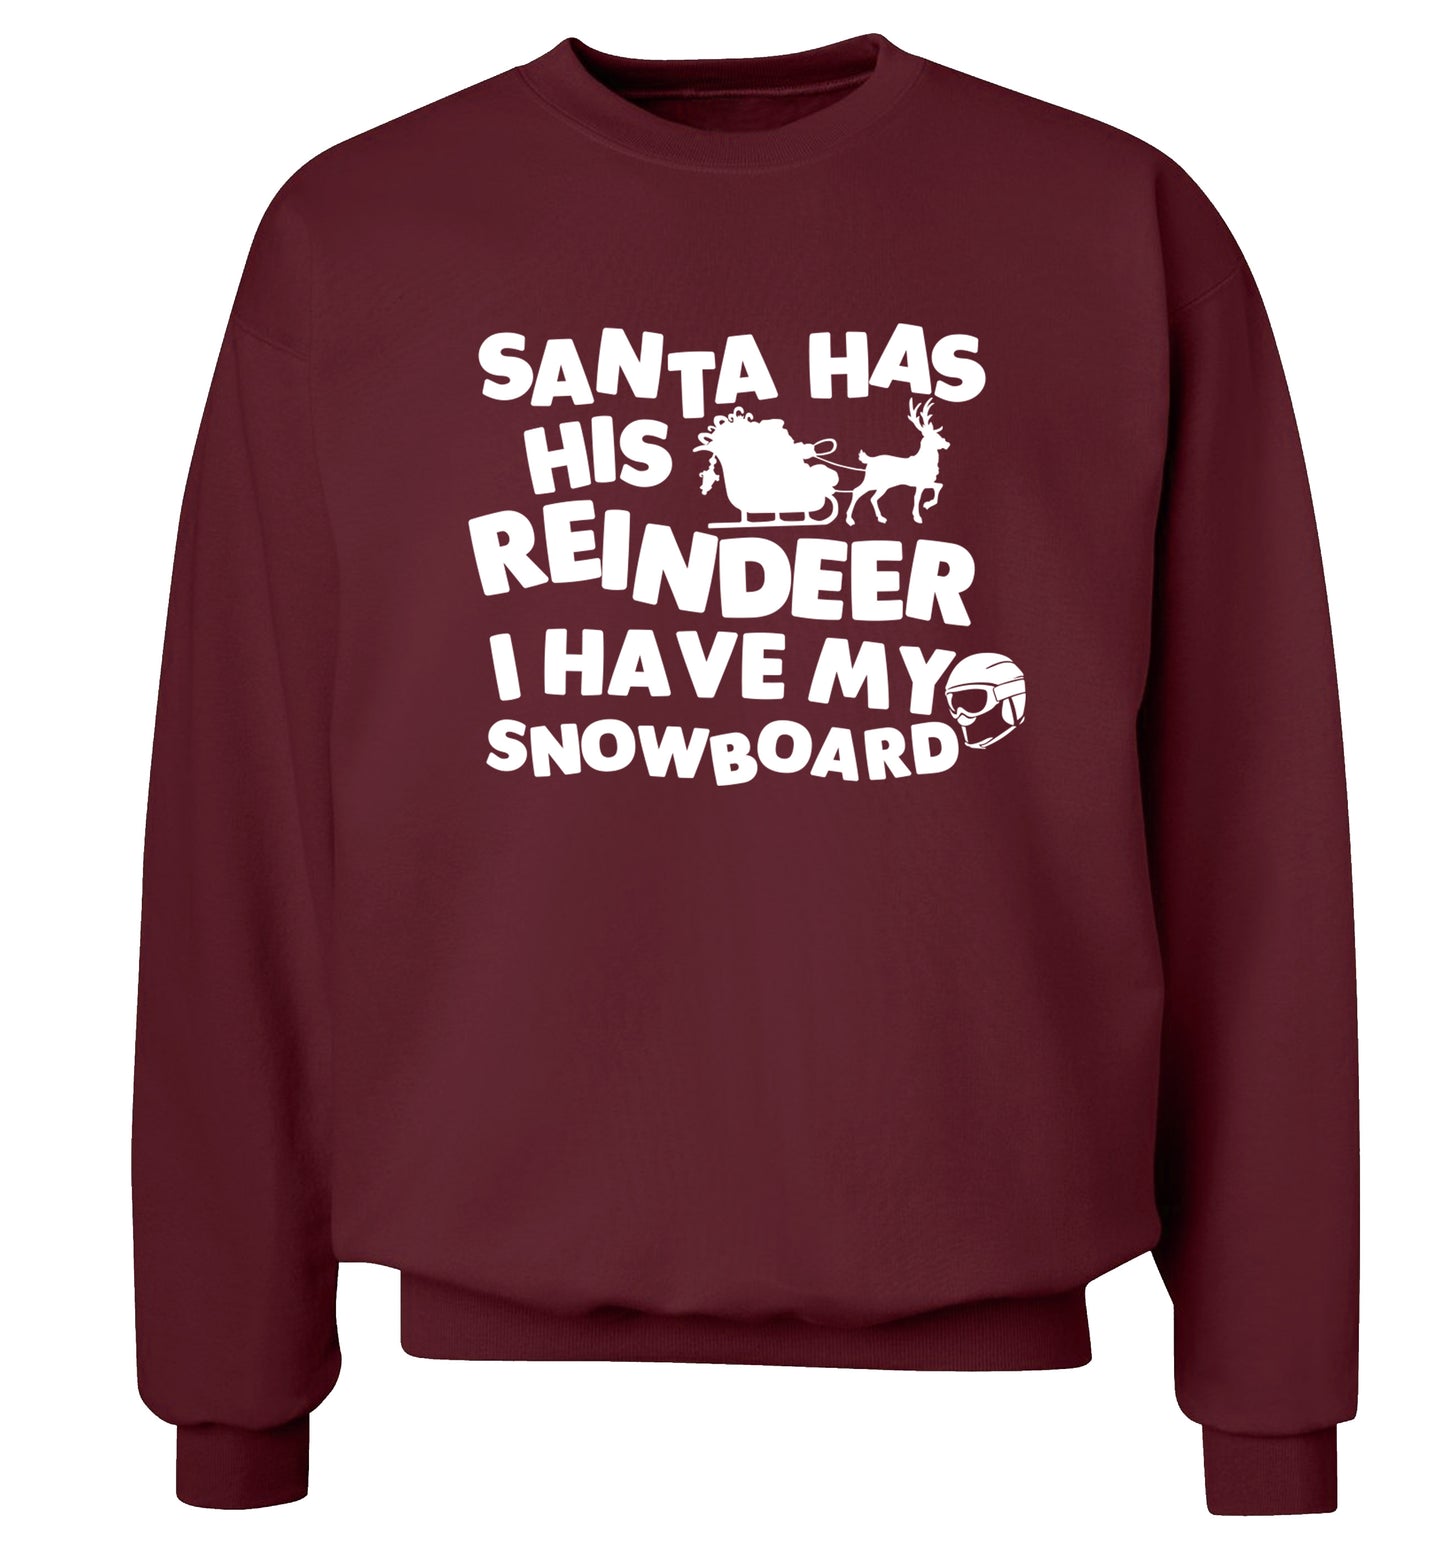 Santa has his reindeer I have my snowboard Adult's unisex maroon Sweater 2XL